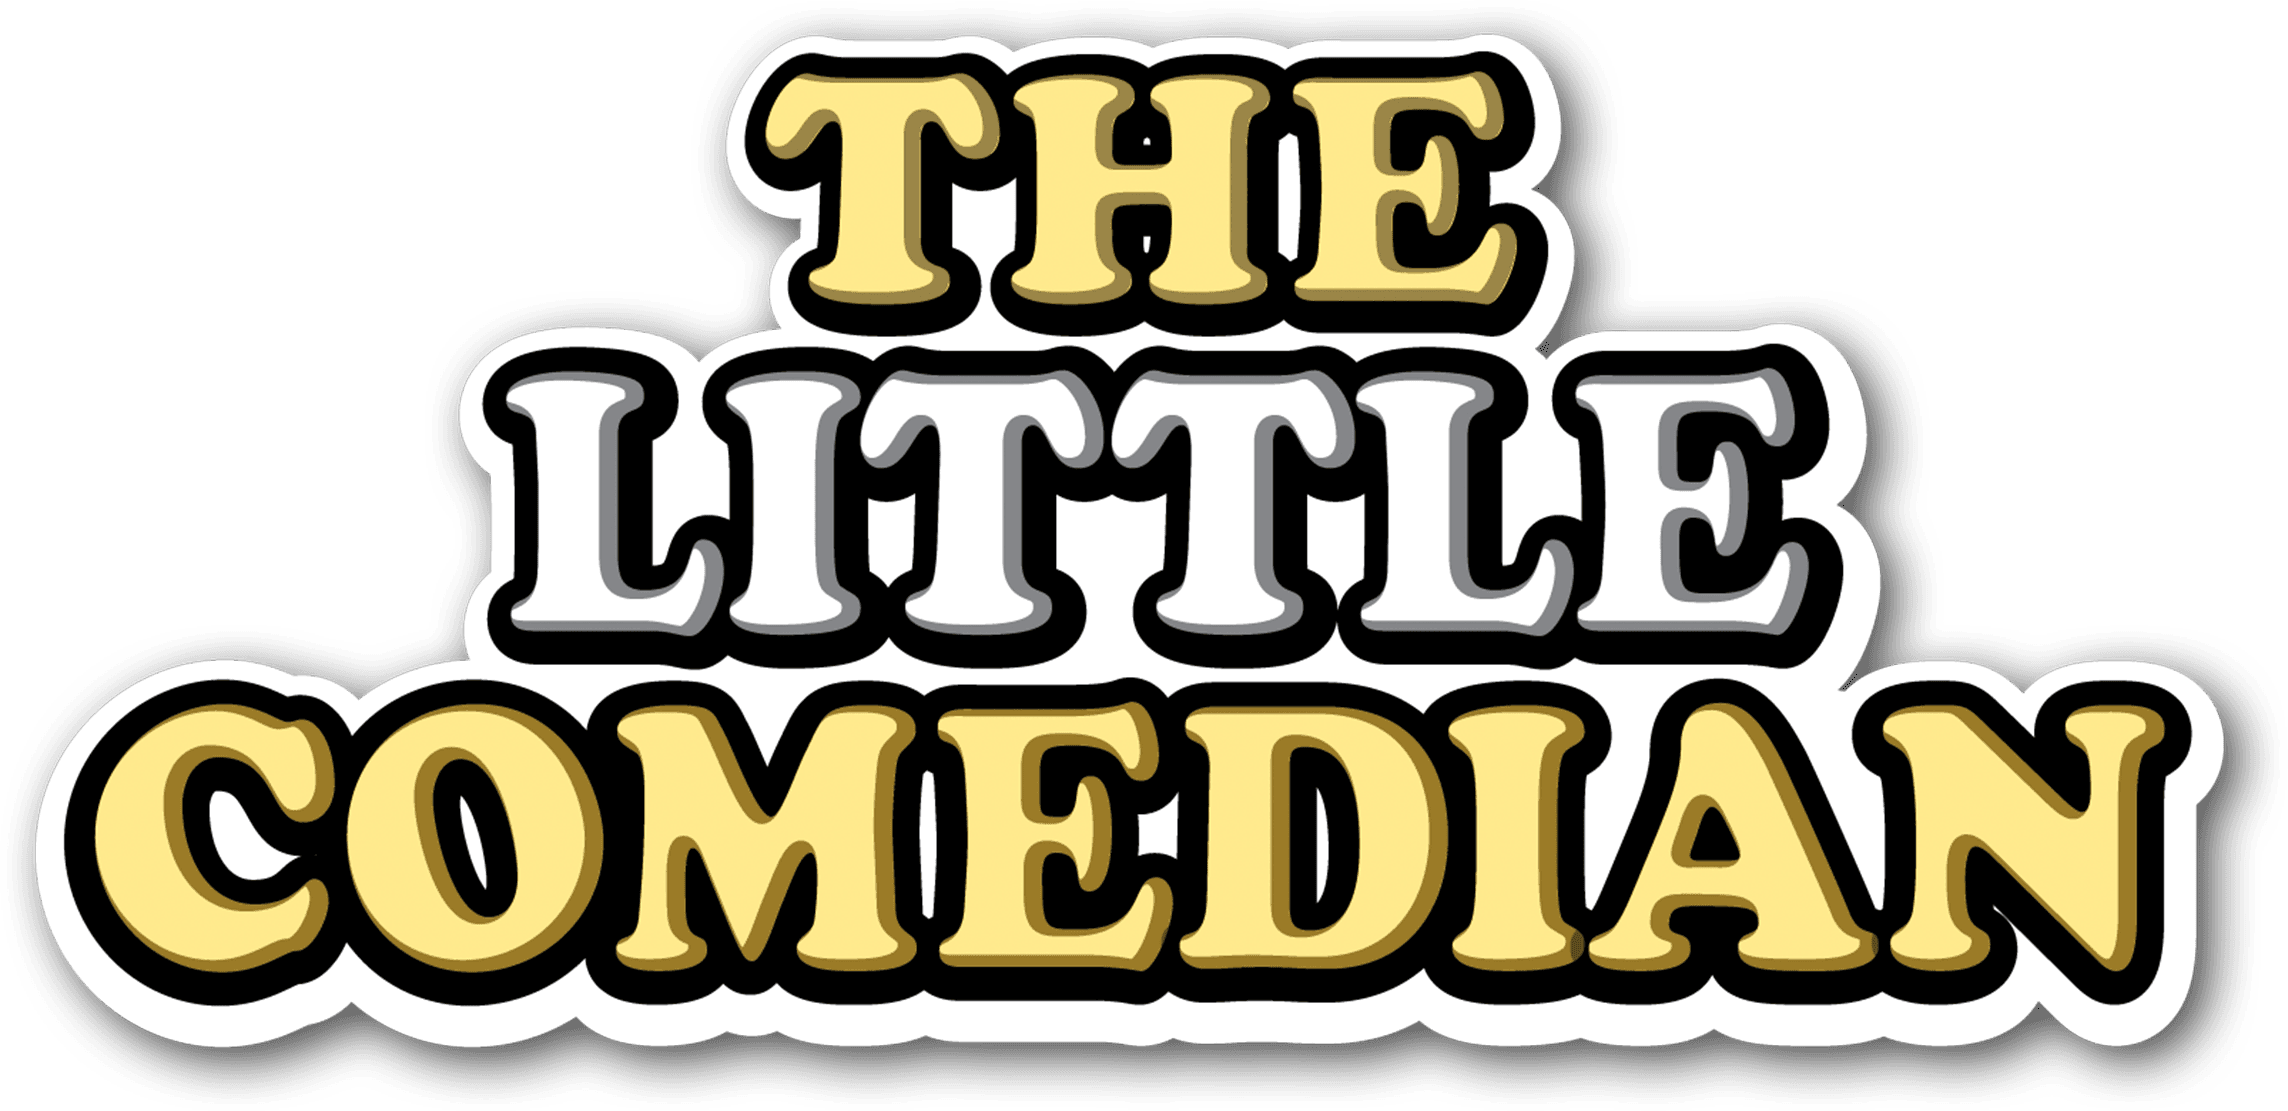 The Little Comedian logo